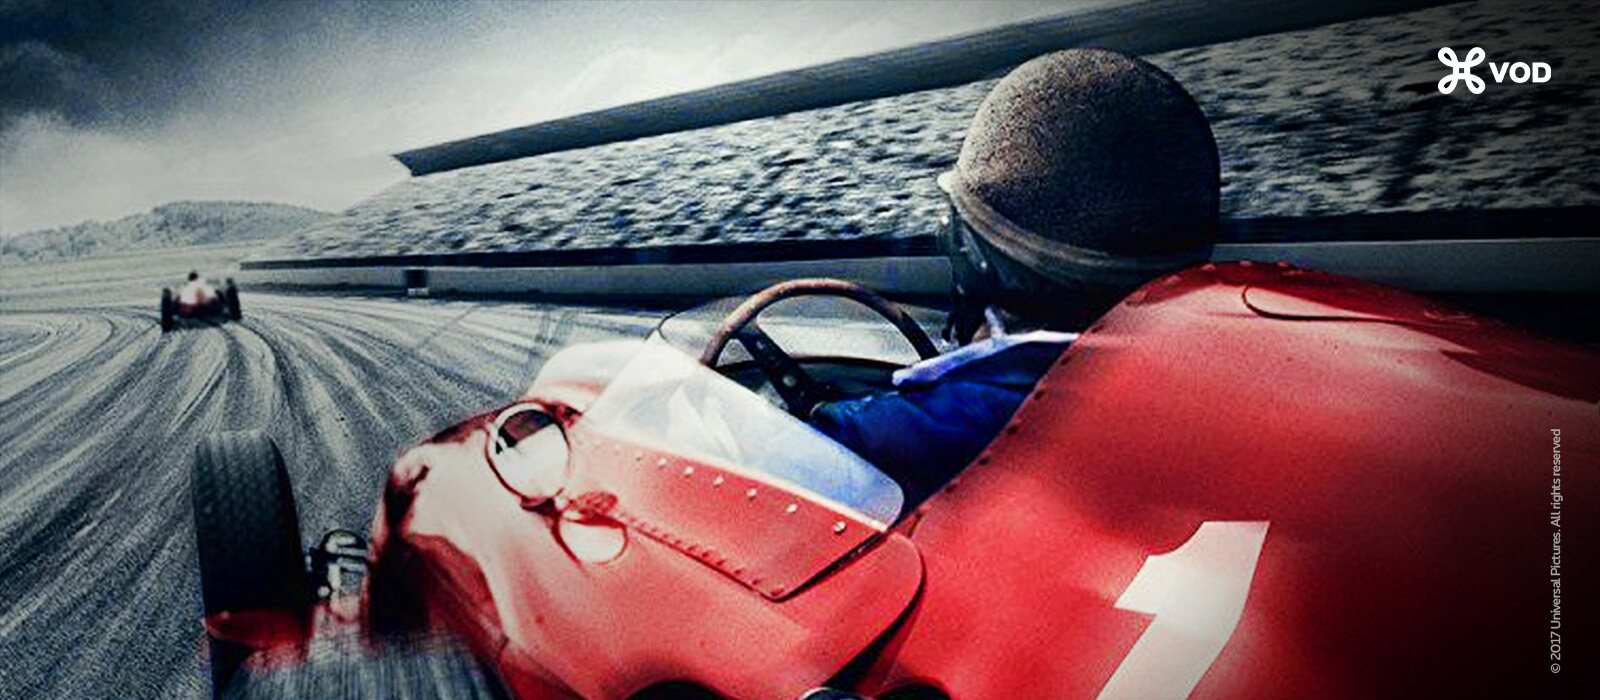 Ferrari : Race To Immortality